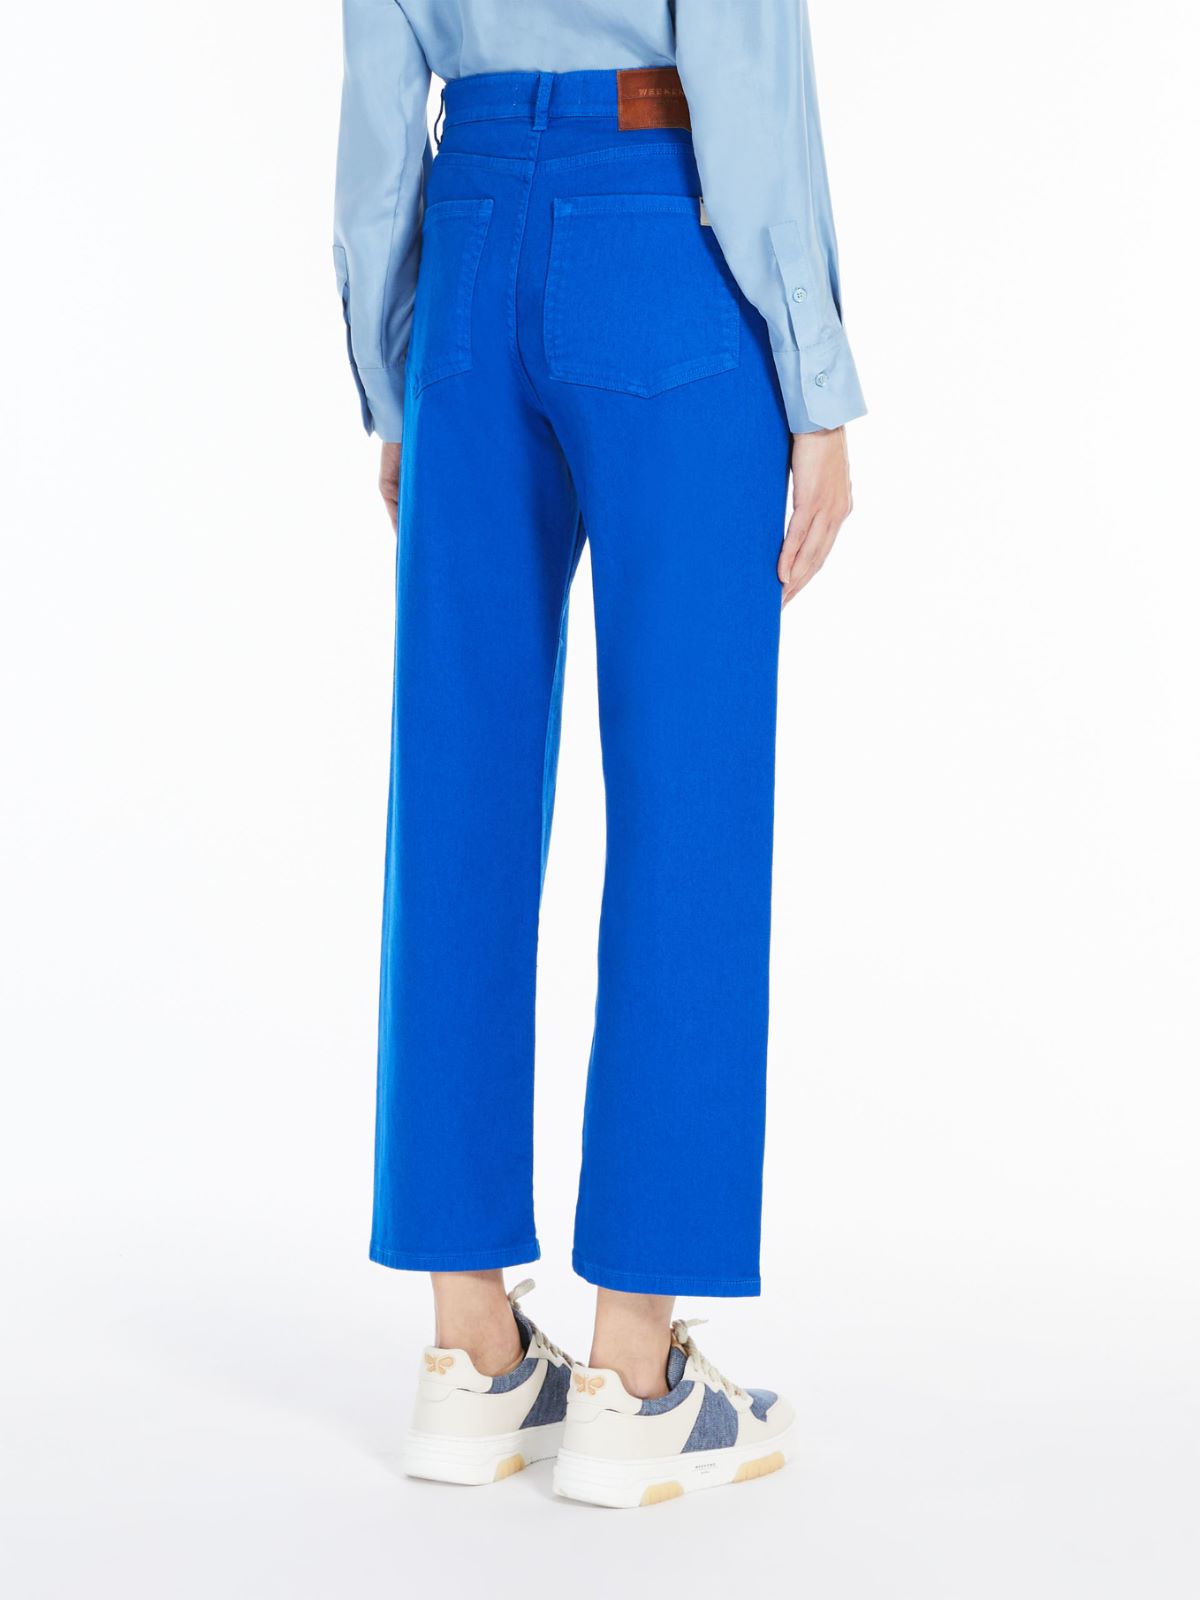 Cotton trousers - CORNFLOWER BLUE - Weekend Max Mara - 3